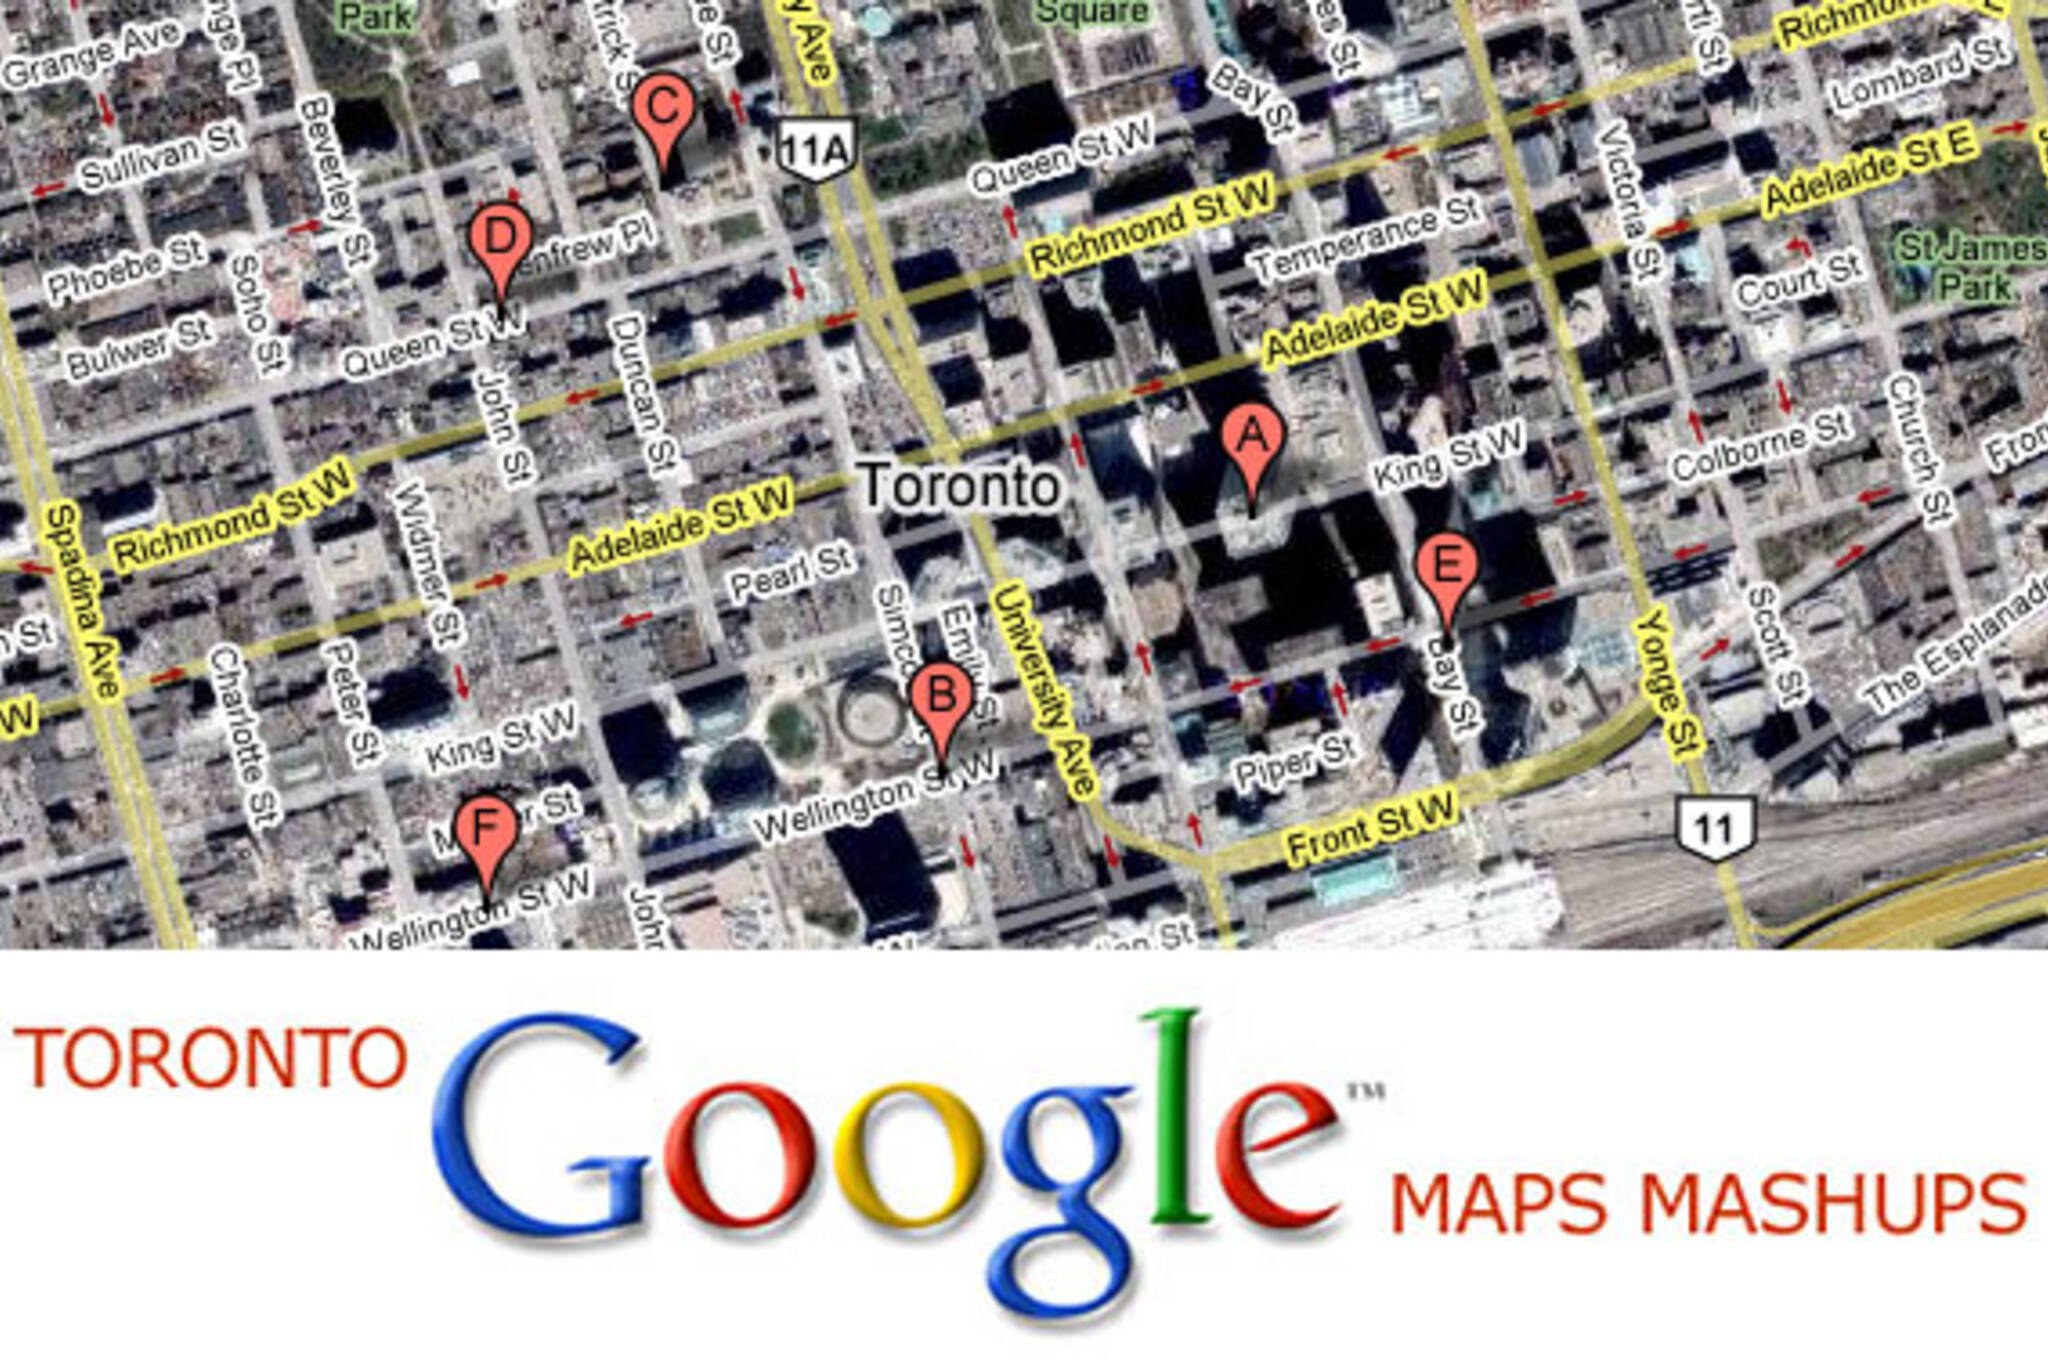 Toronto Google Maps Mashups List